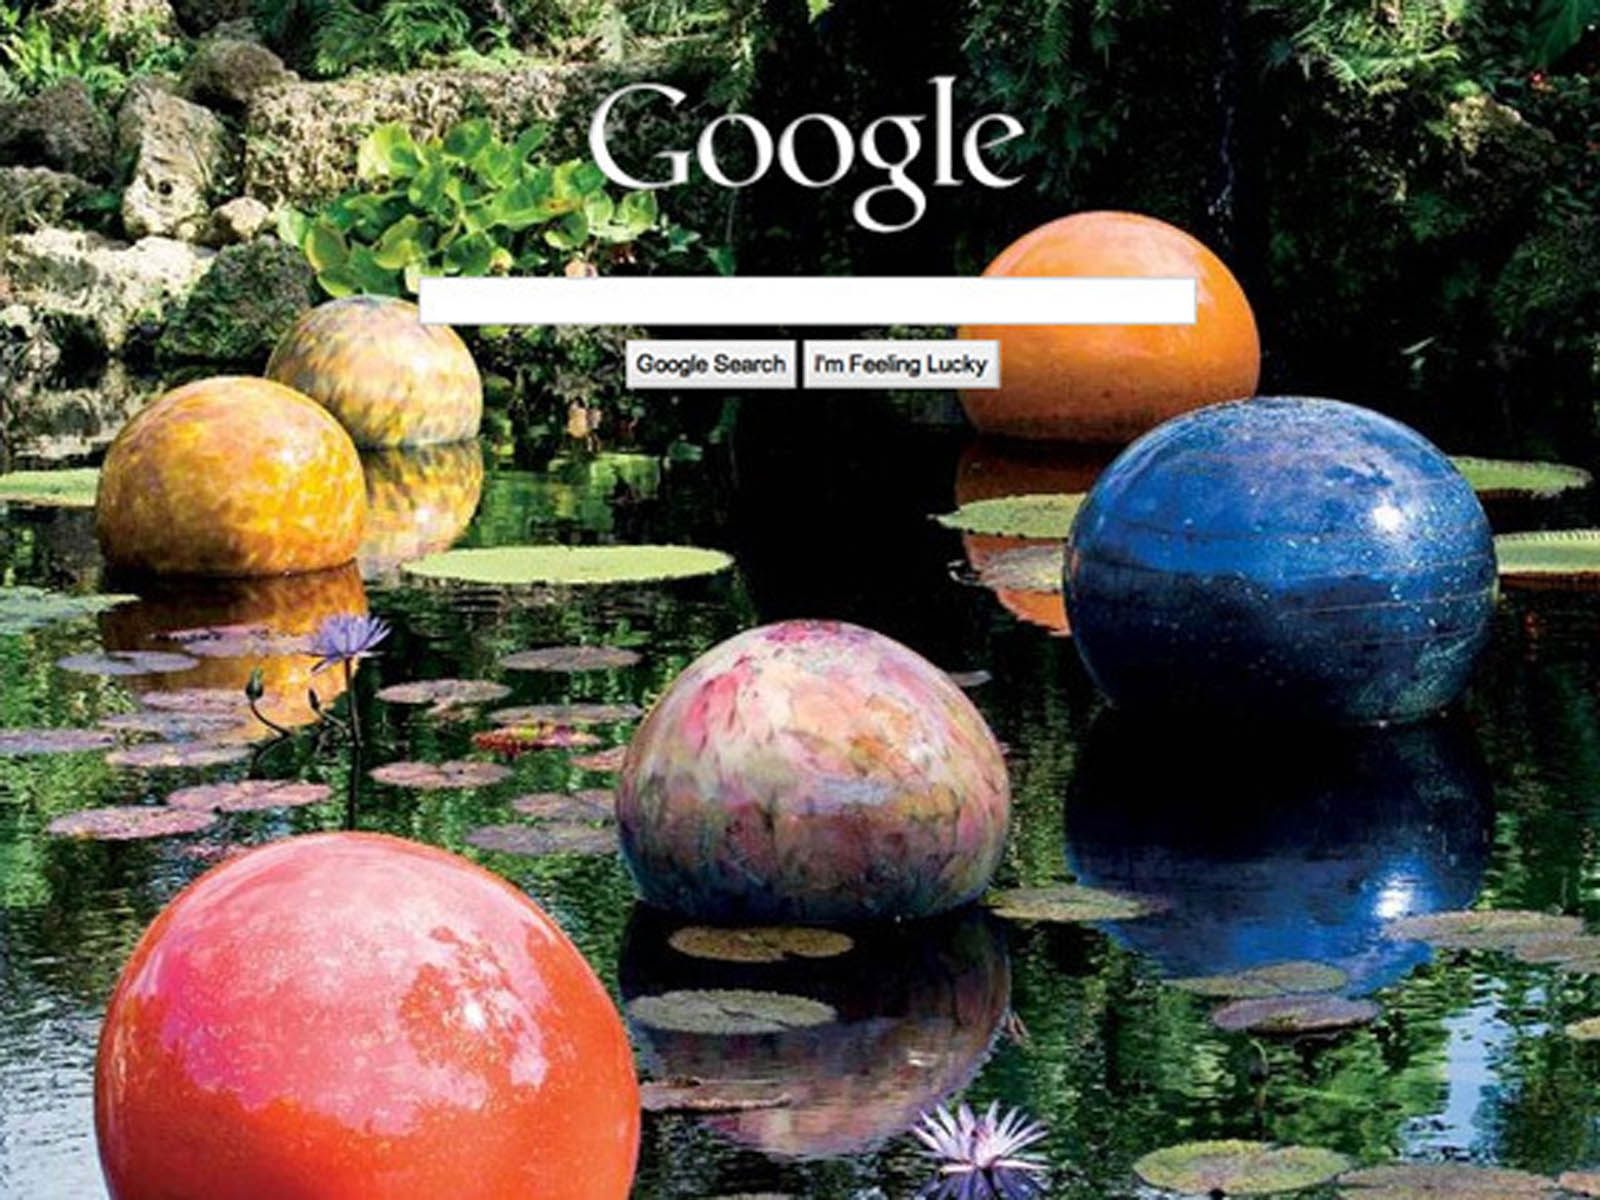 Google Wallpaper Desktop